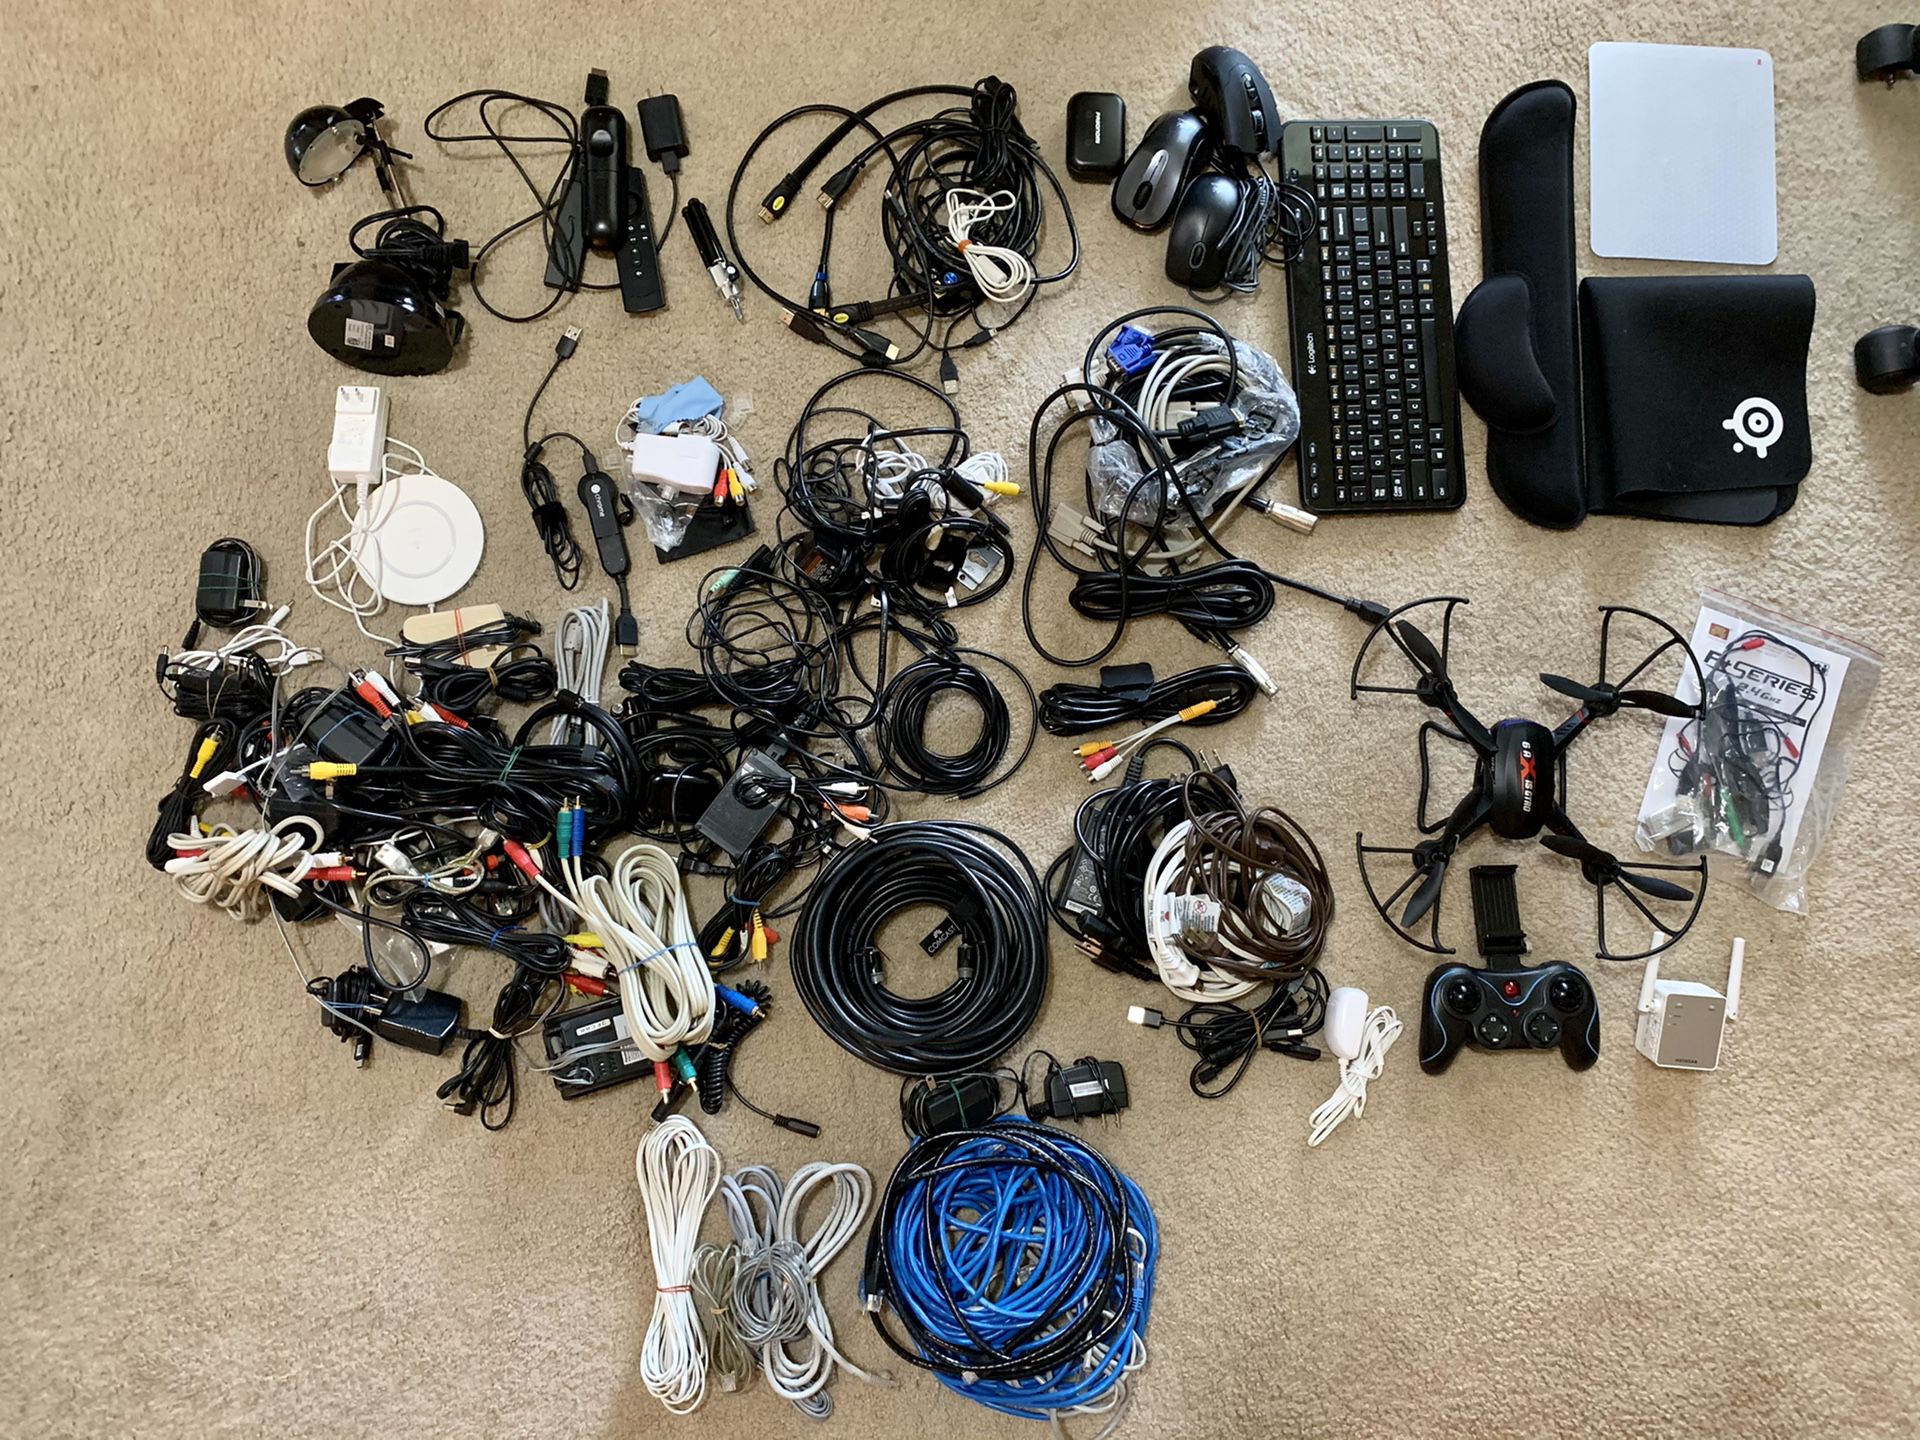 Random Technology Stuff: drone, Ethernet, Power Adapters, mouse, etc.